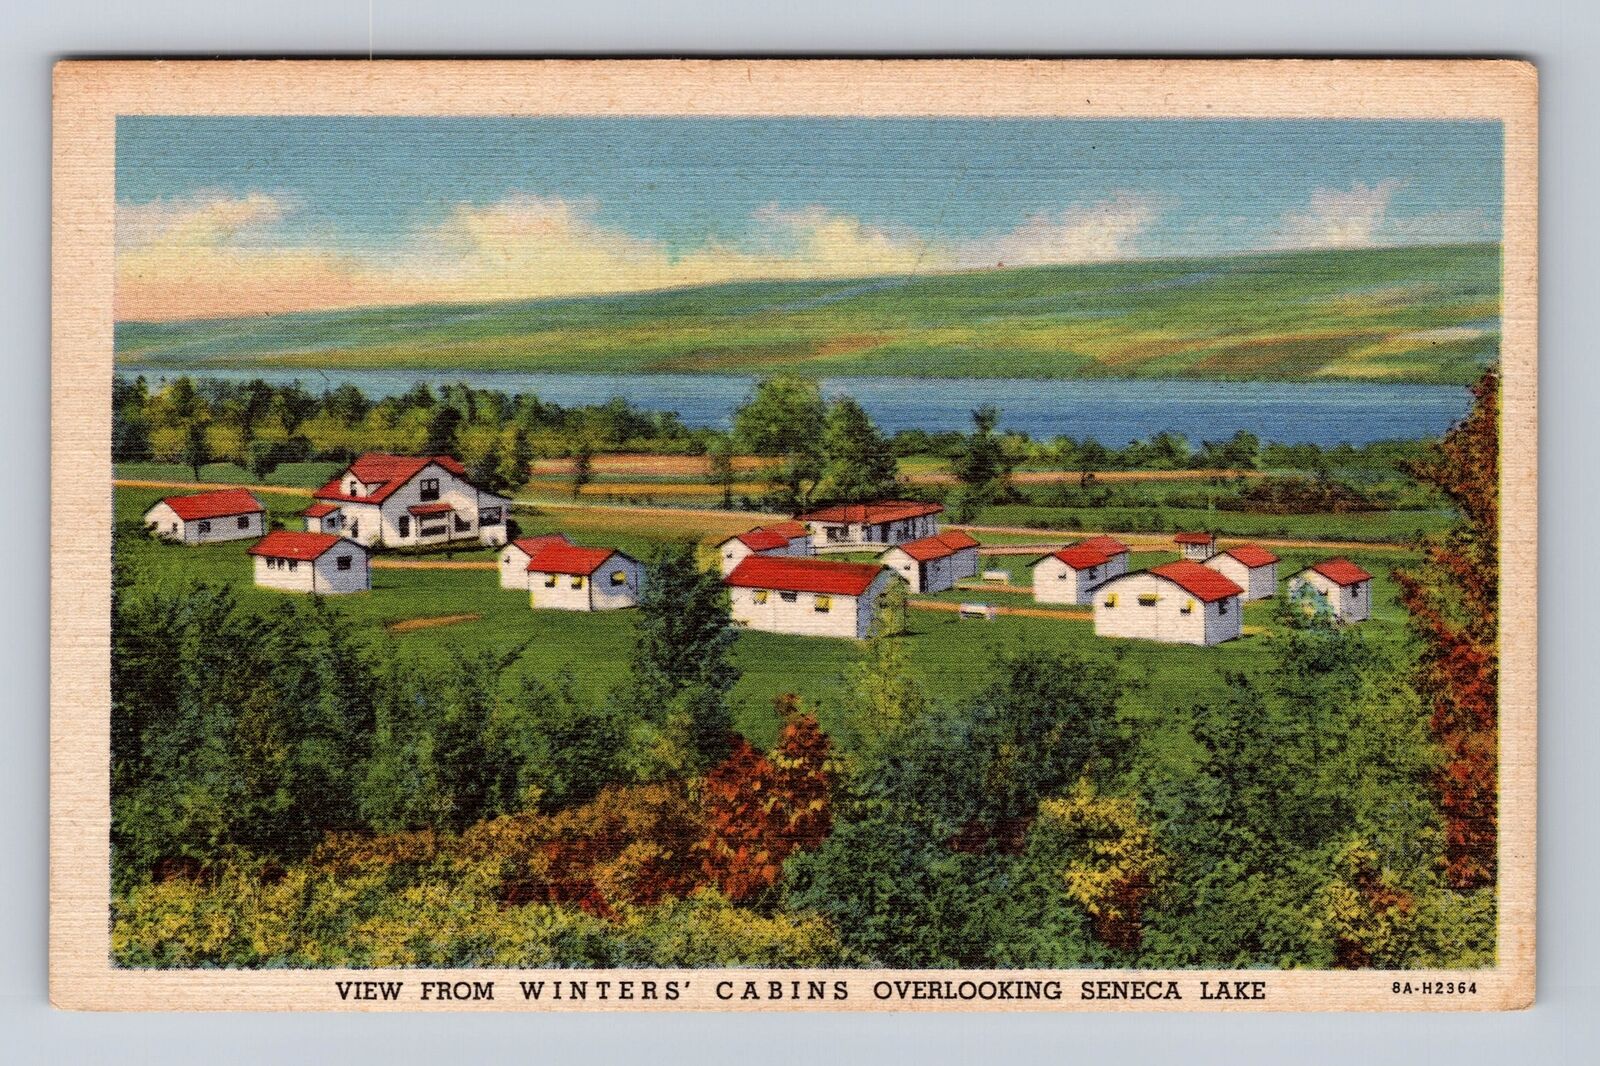 Watkins Glen NY-New York, Winter Insulated Cabins, Seneca Lake, Vintage Postcard